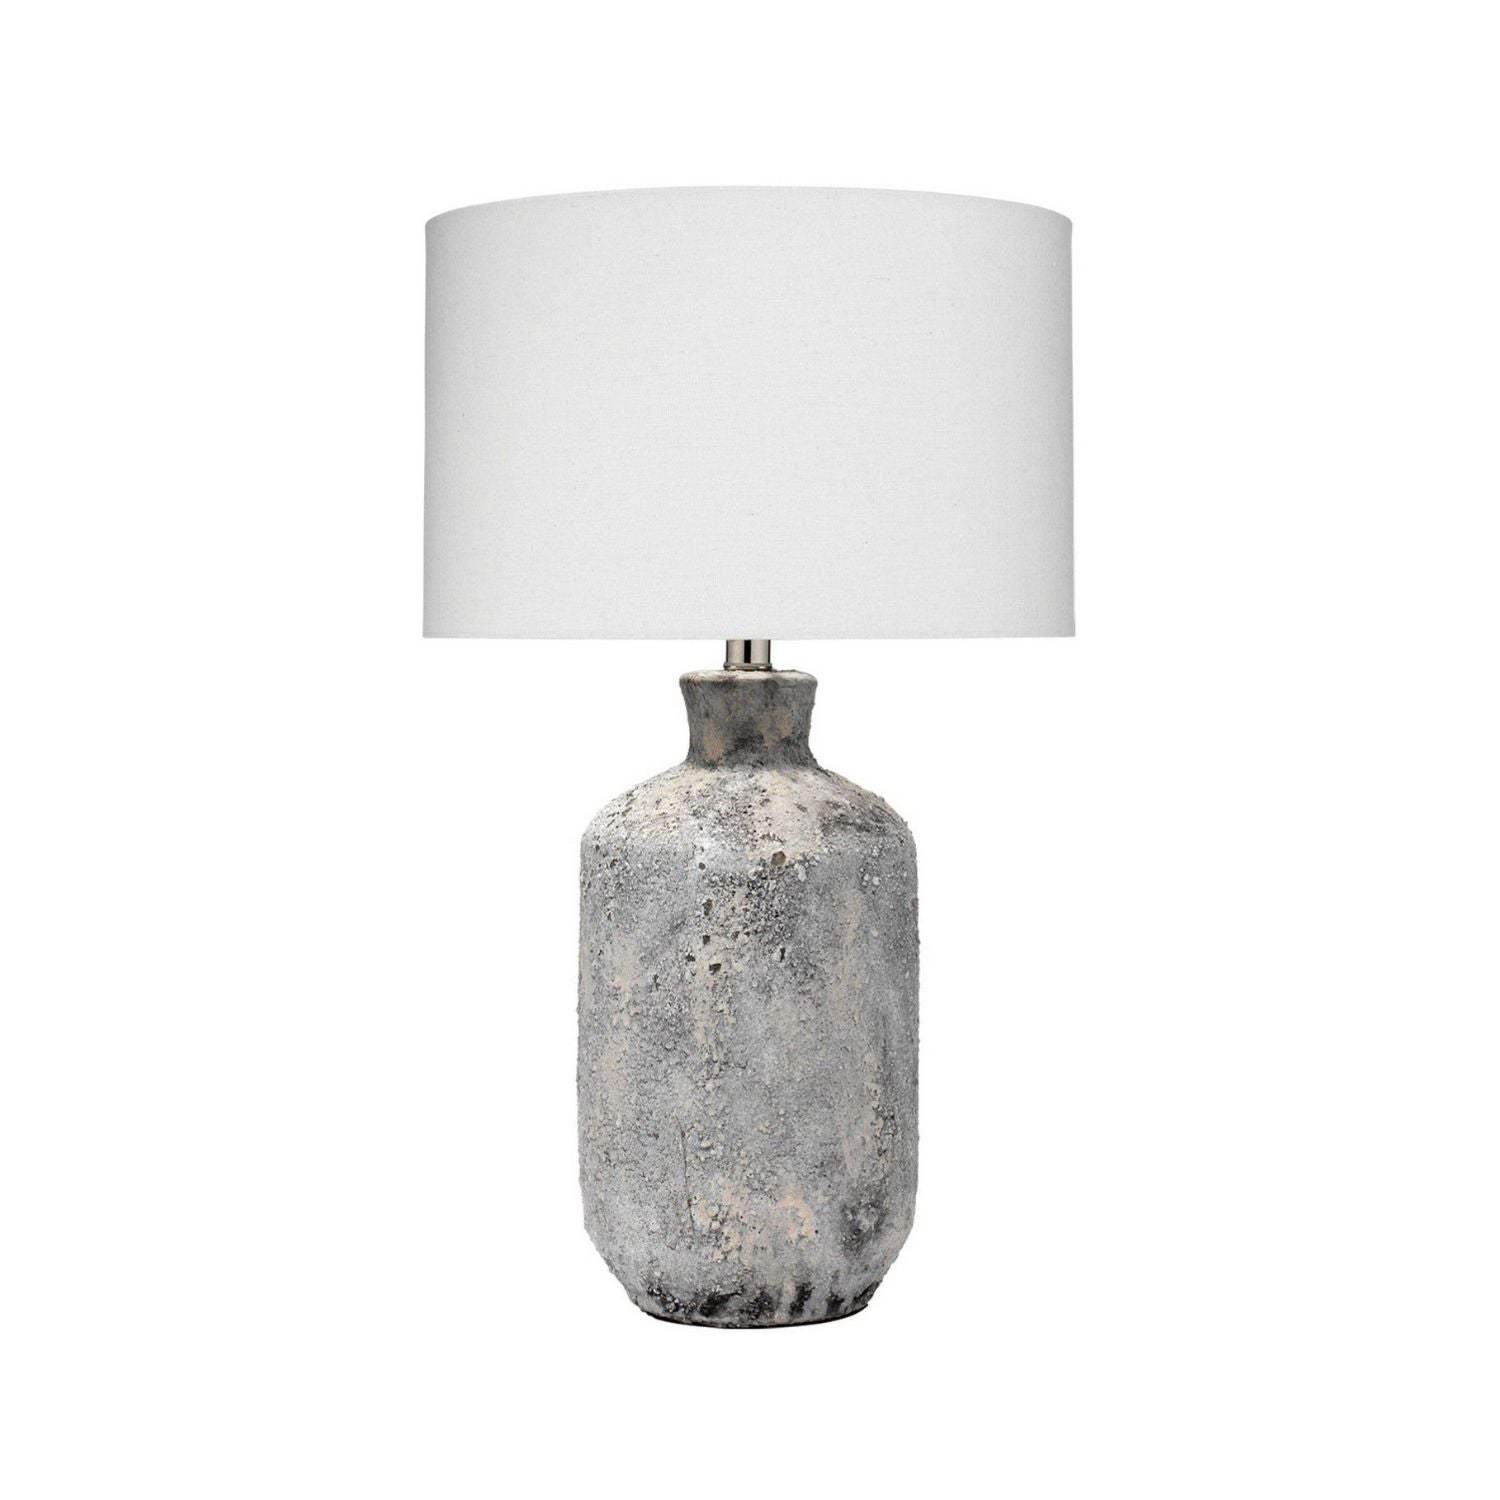 Blaire Ceramic Table Lamp, Grey